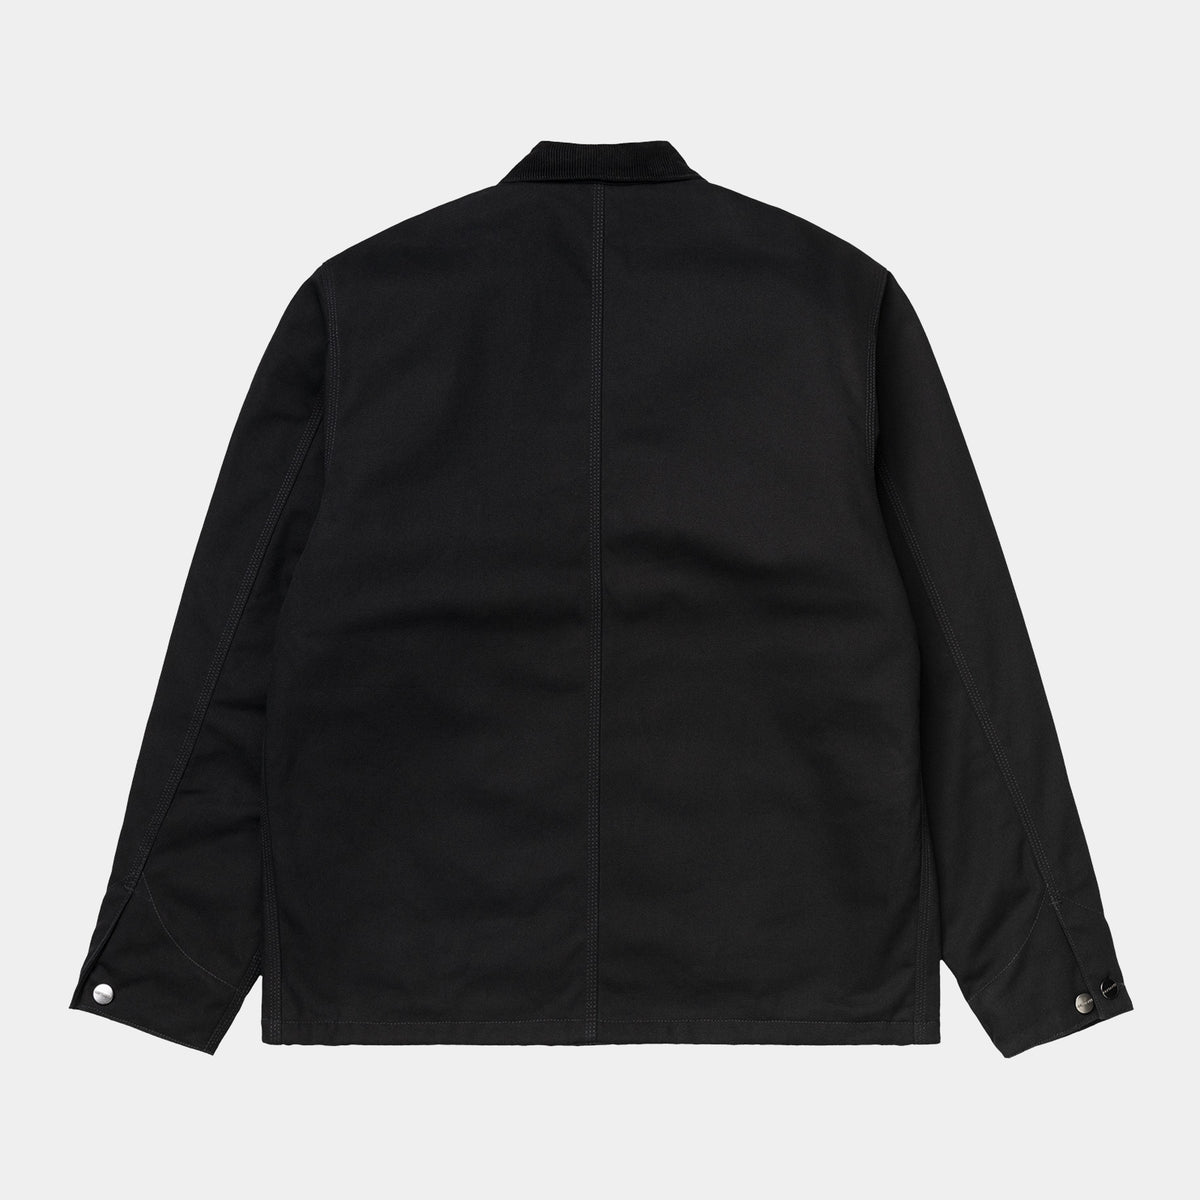 Carhartt Michigan Coat - Rigid Black Blanket Lined